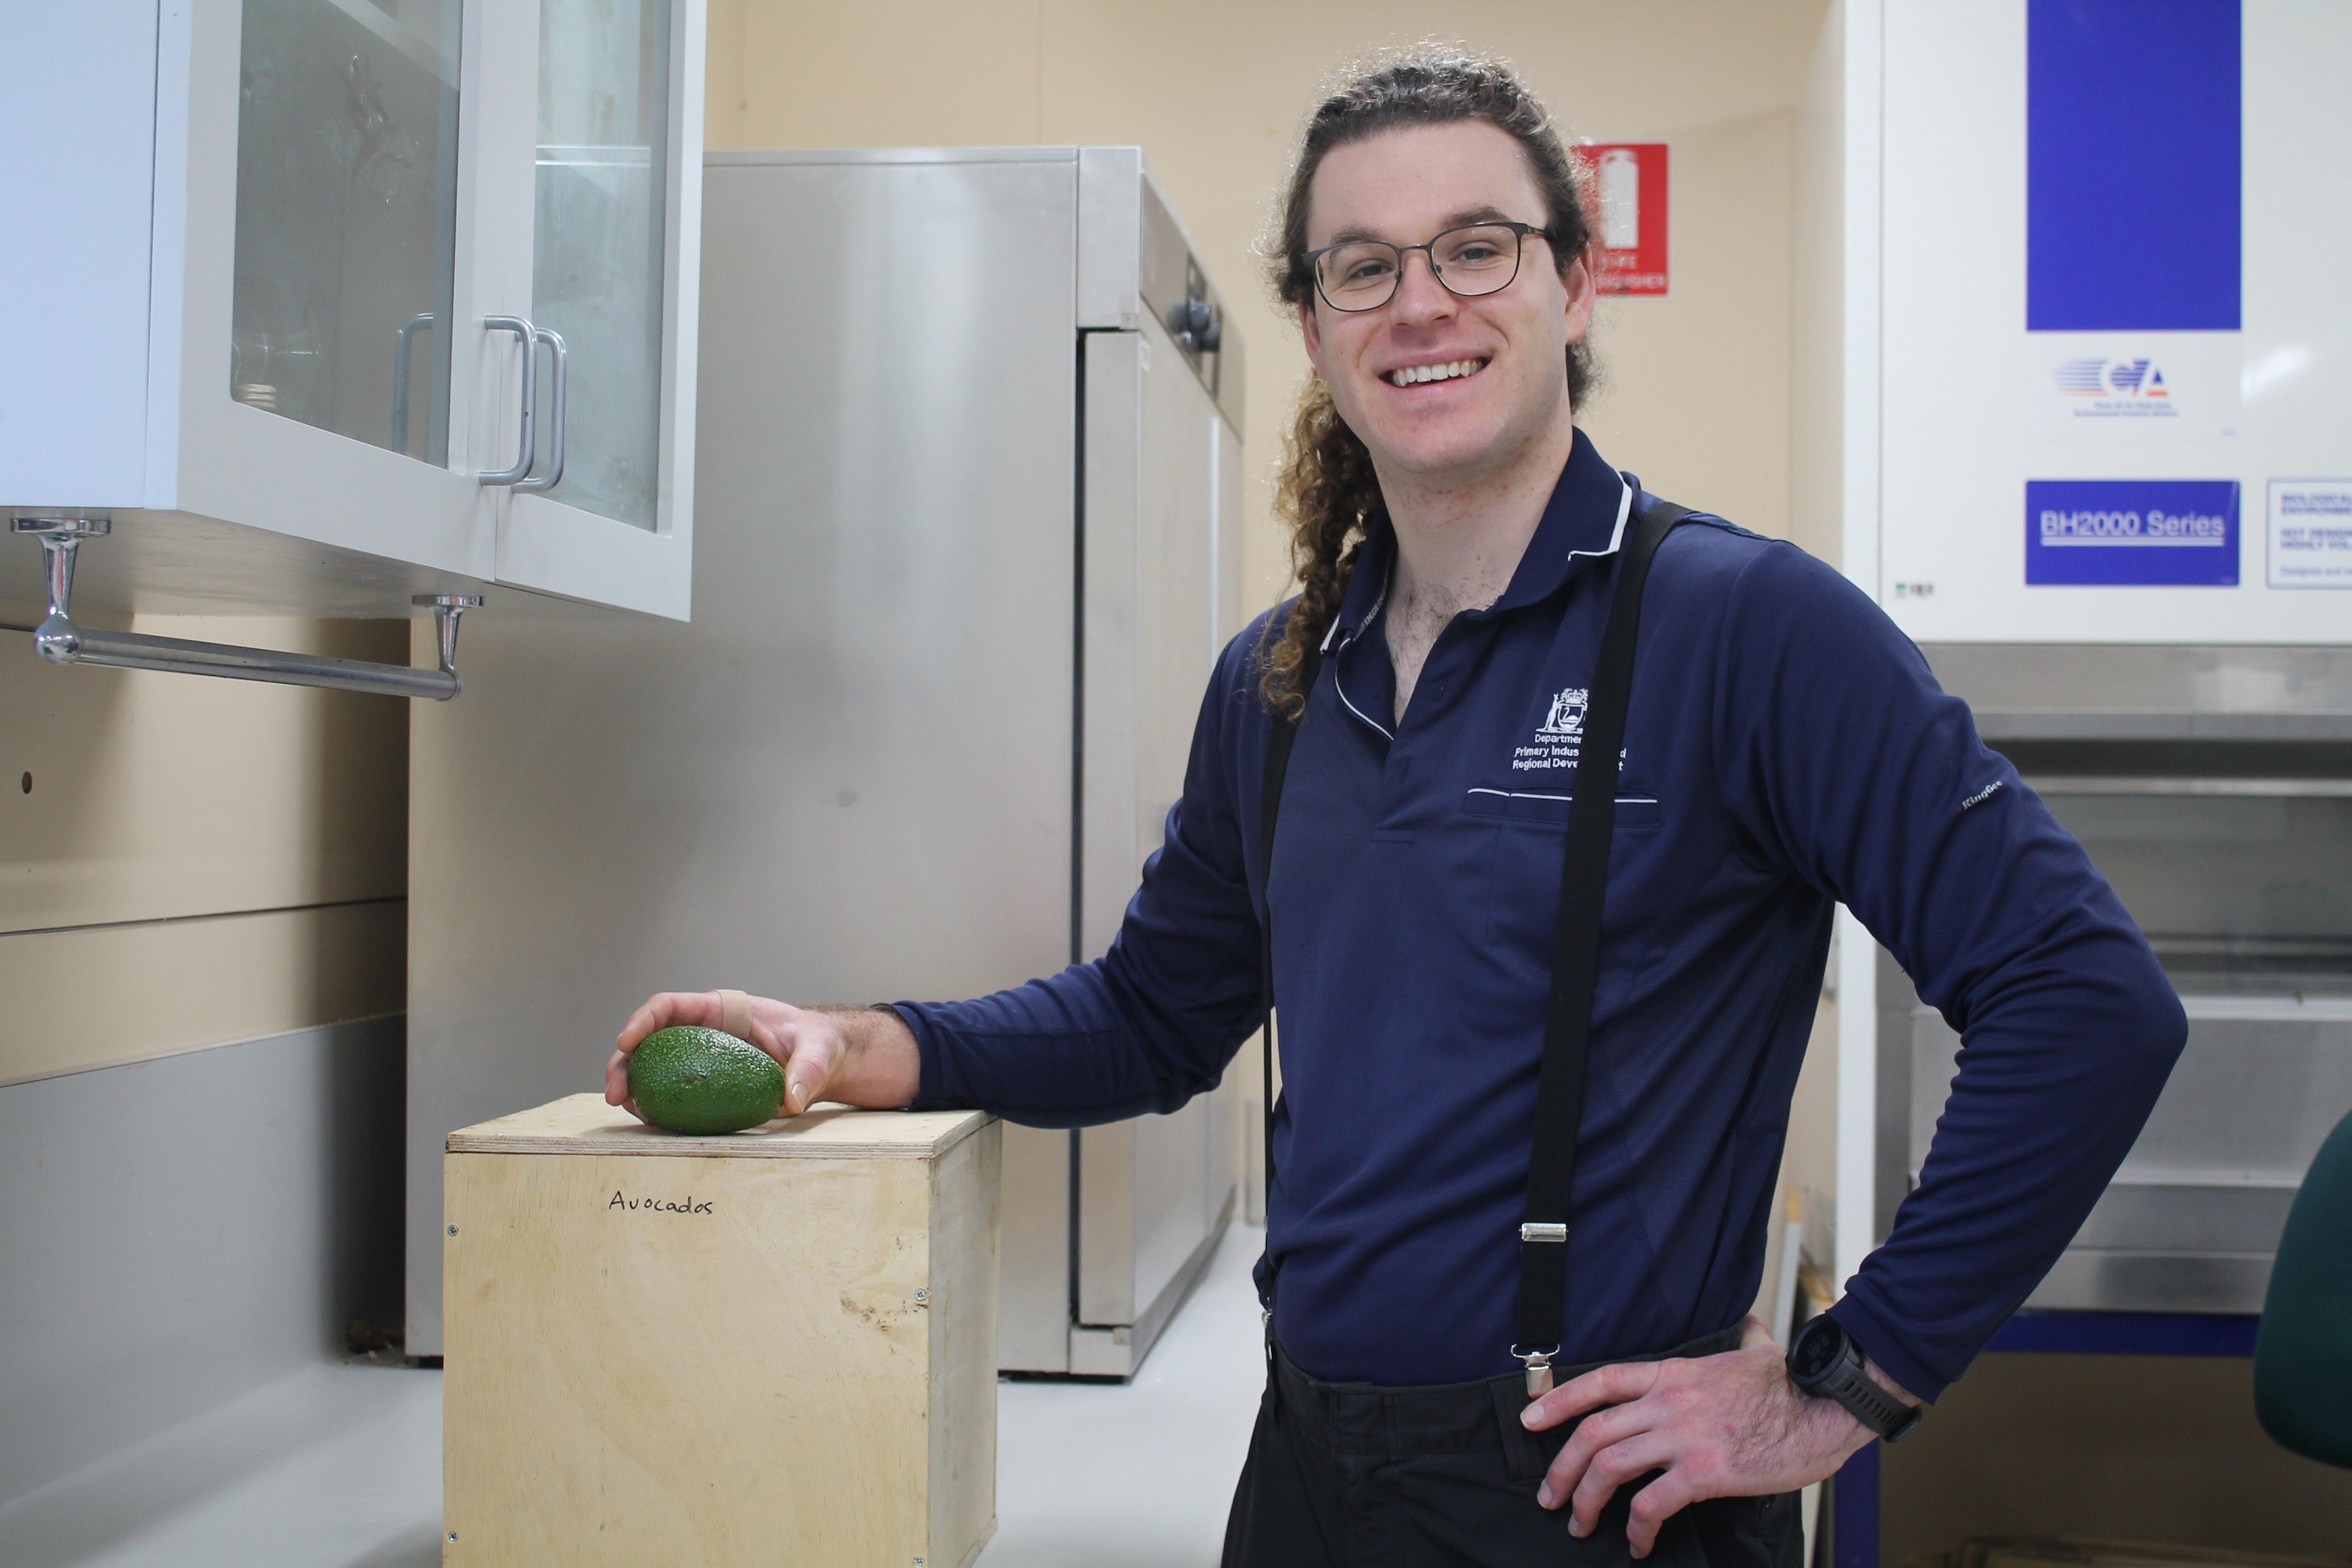 DPIRD research scientist Declan McCauley in lab holding an avocado